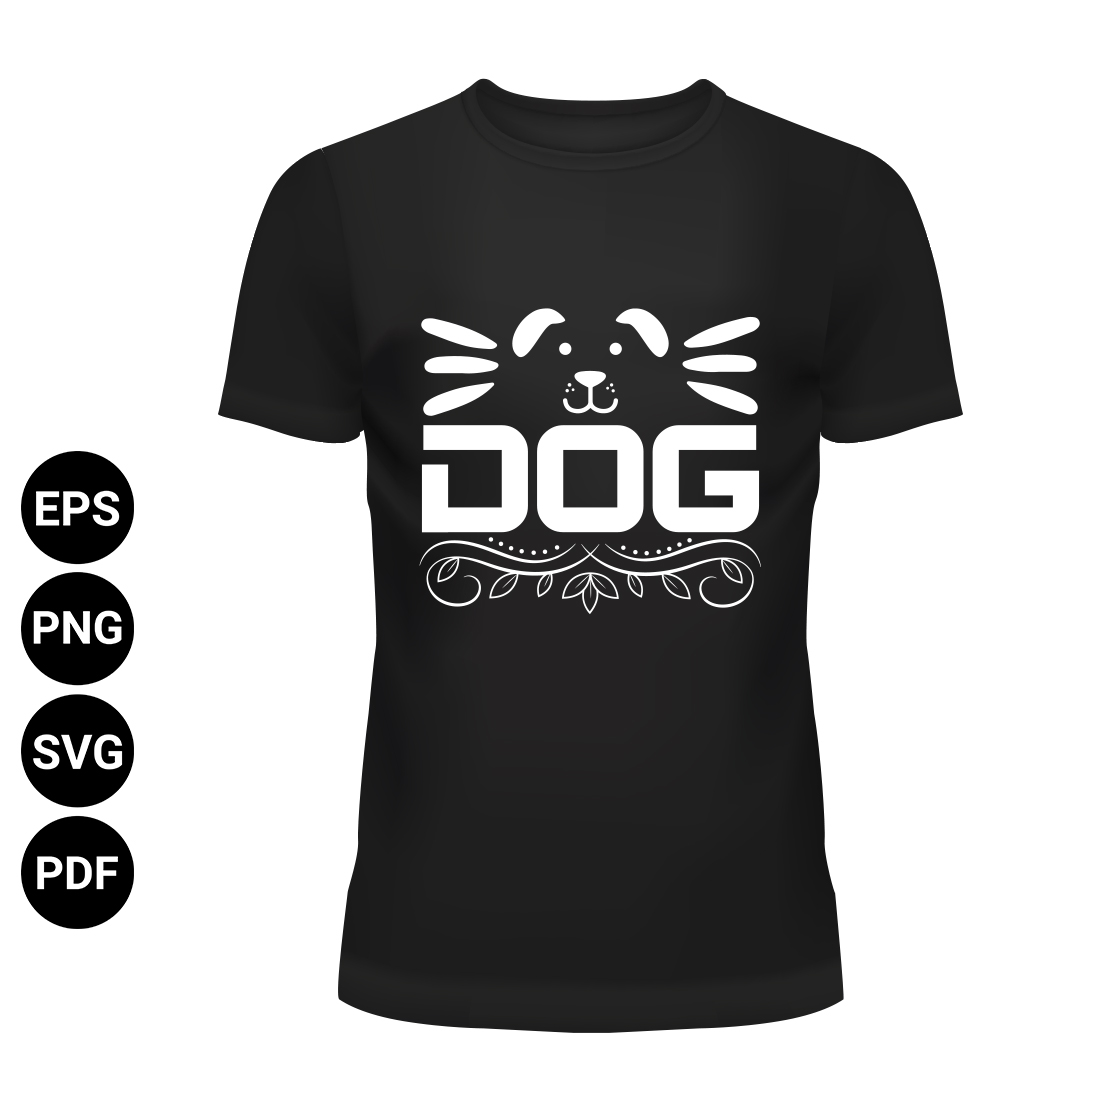 Dog T-shirt design preview image.